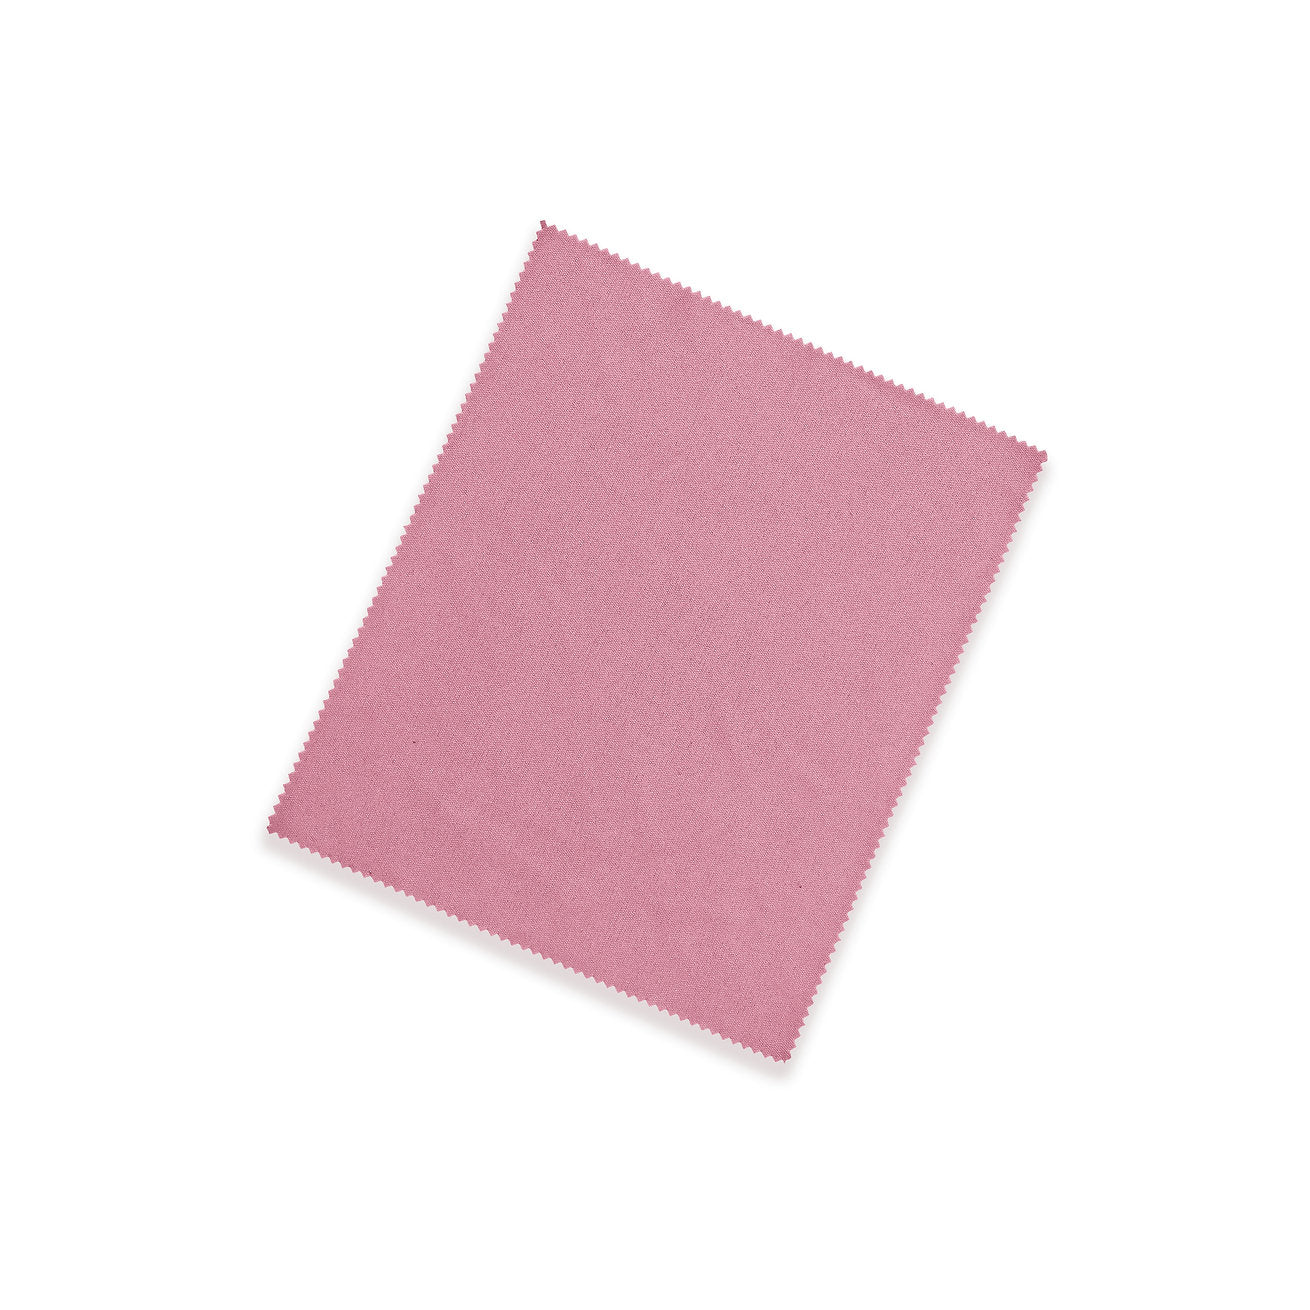 Pink microfiber cloth